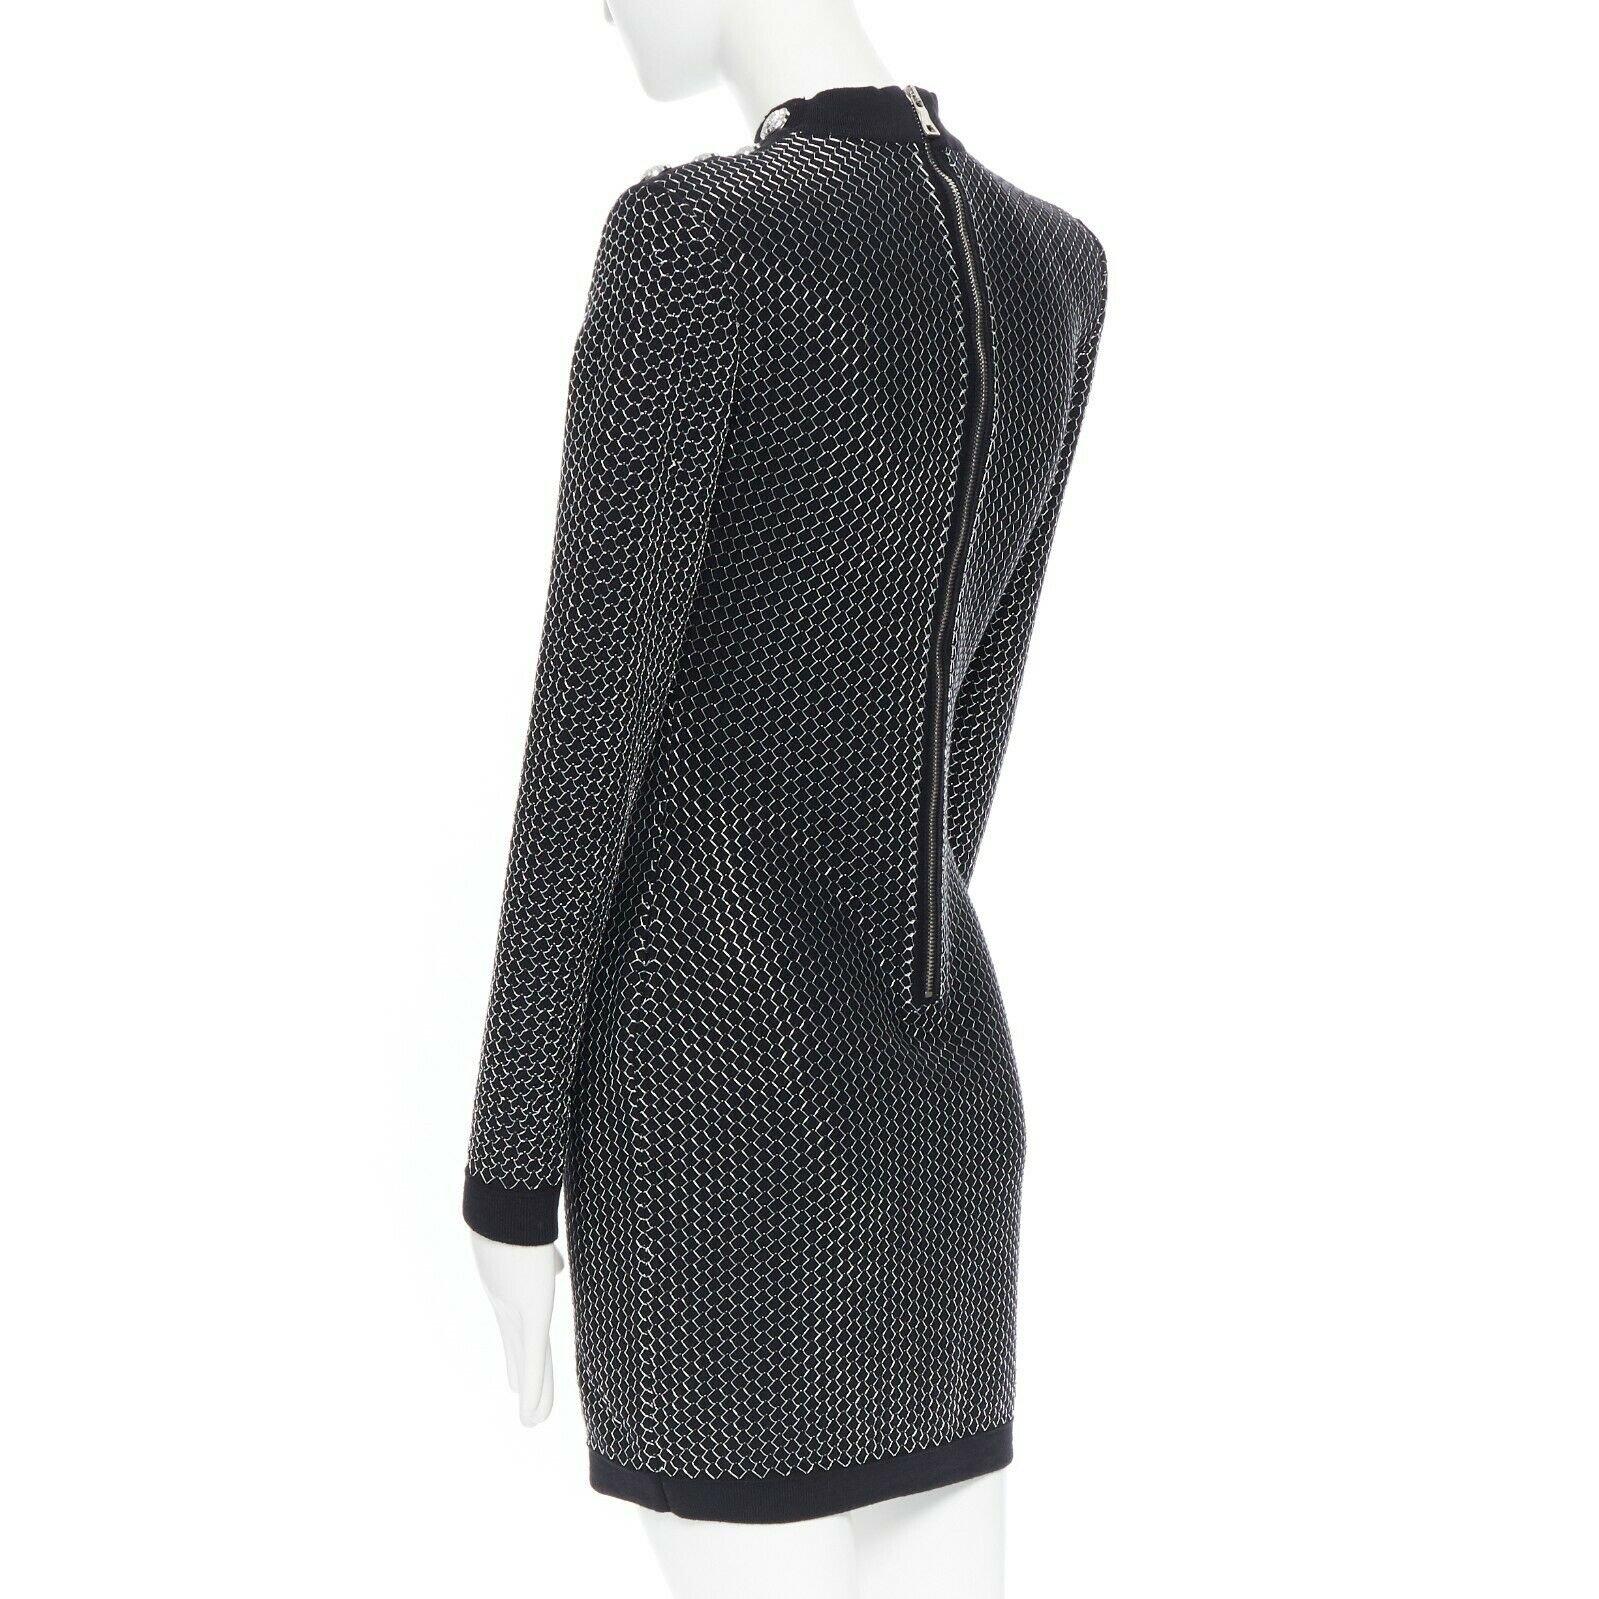 BALMAIN ROUSTEING black silver thread fluffy military button bodycon dress S 1